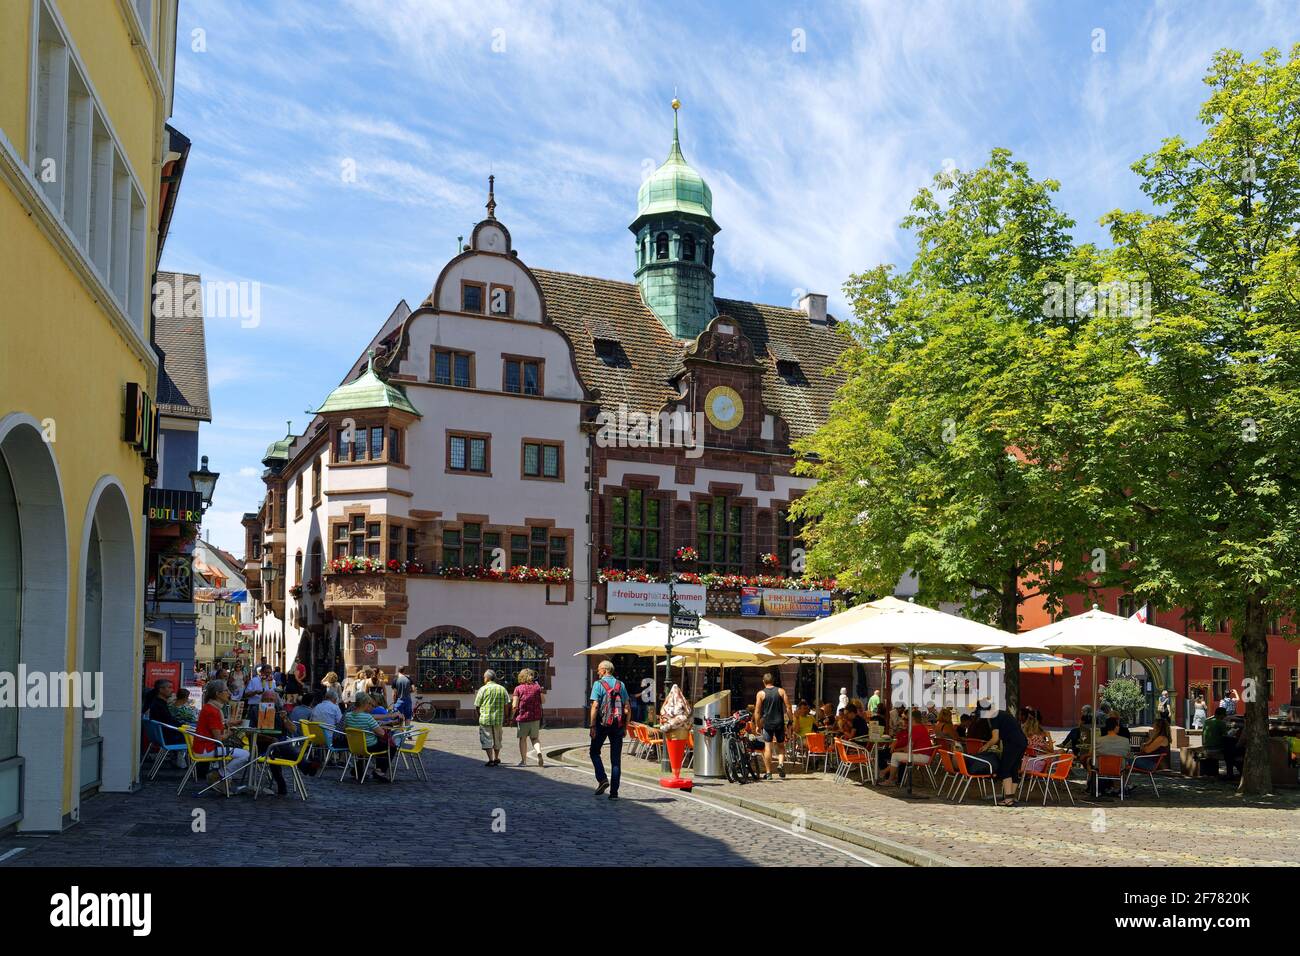 Germania, Baden Wurttemberg, Freiburg im Breisgau, Rathausplatz, Rathaus (municipio) Foto Stock